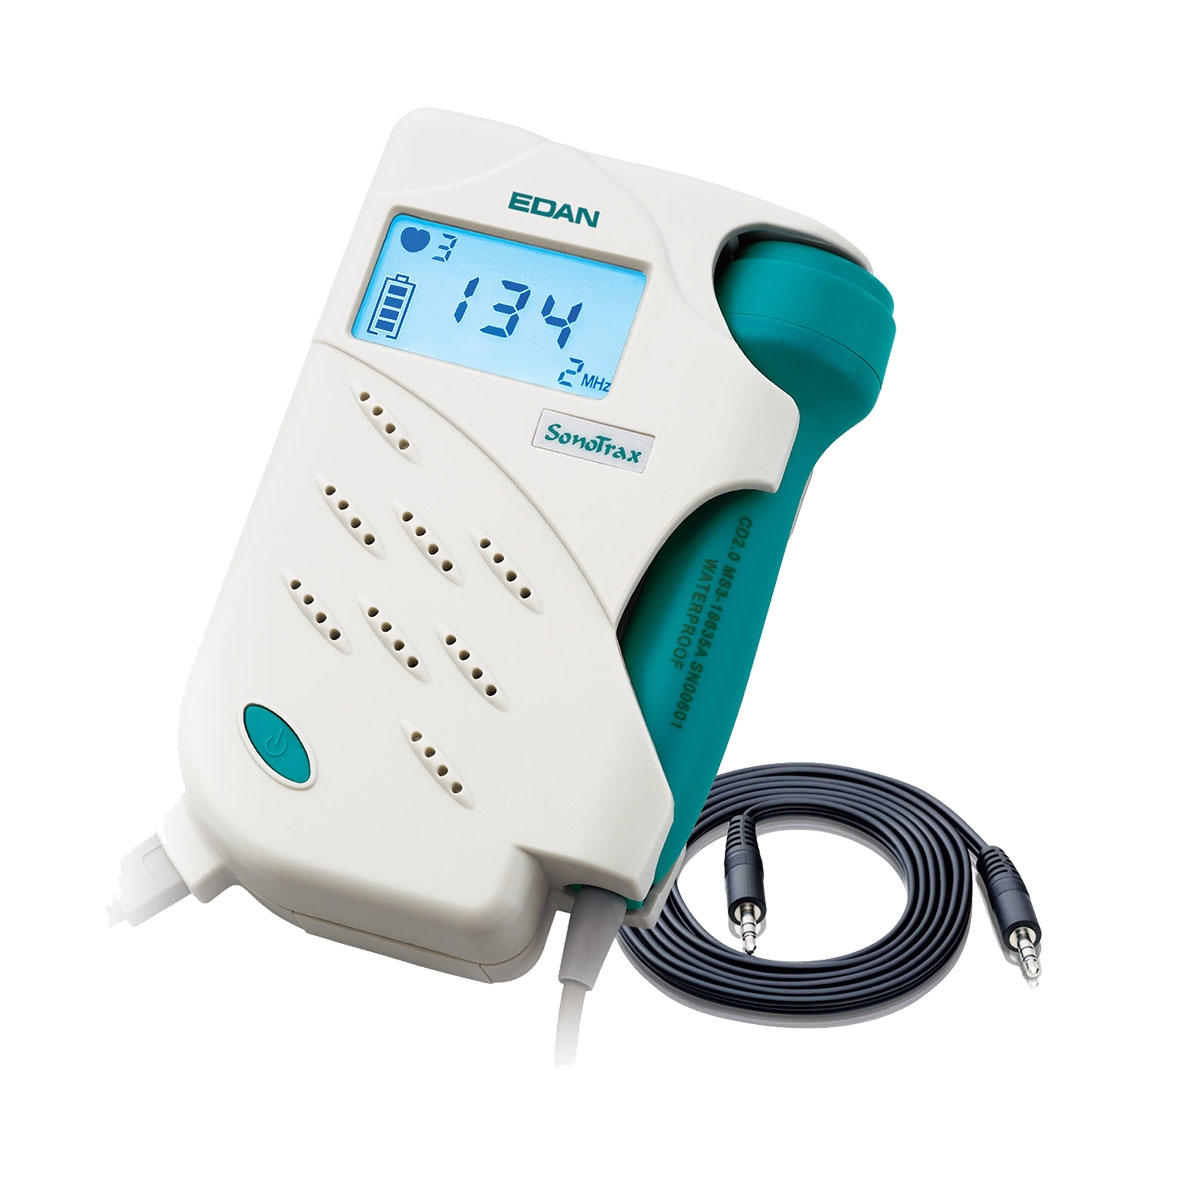 Sonotrax Pro Fetal Doppler Baby Heart Monitor - MDPRO USA